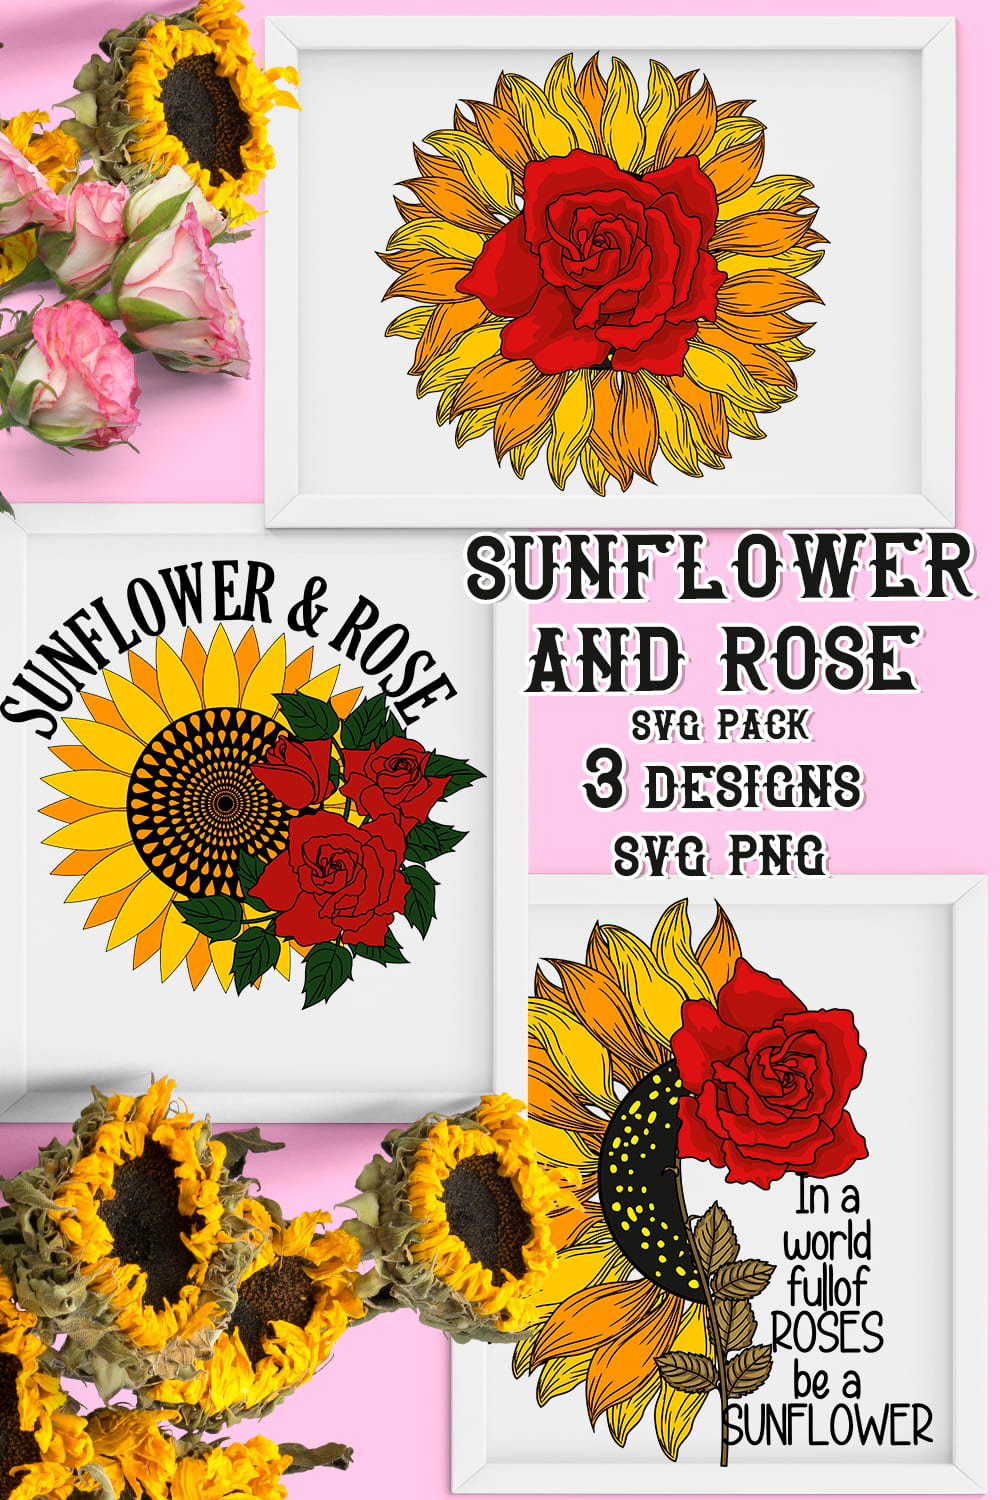 Sunflower And Rose Svg - Pinterest.